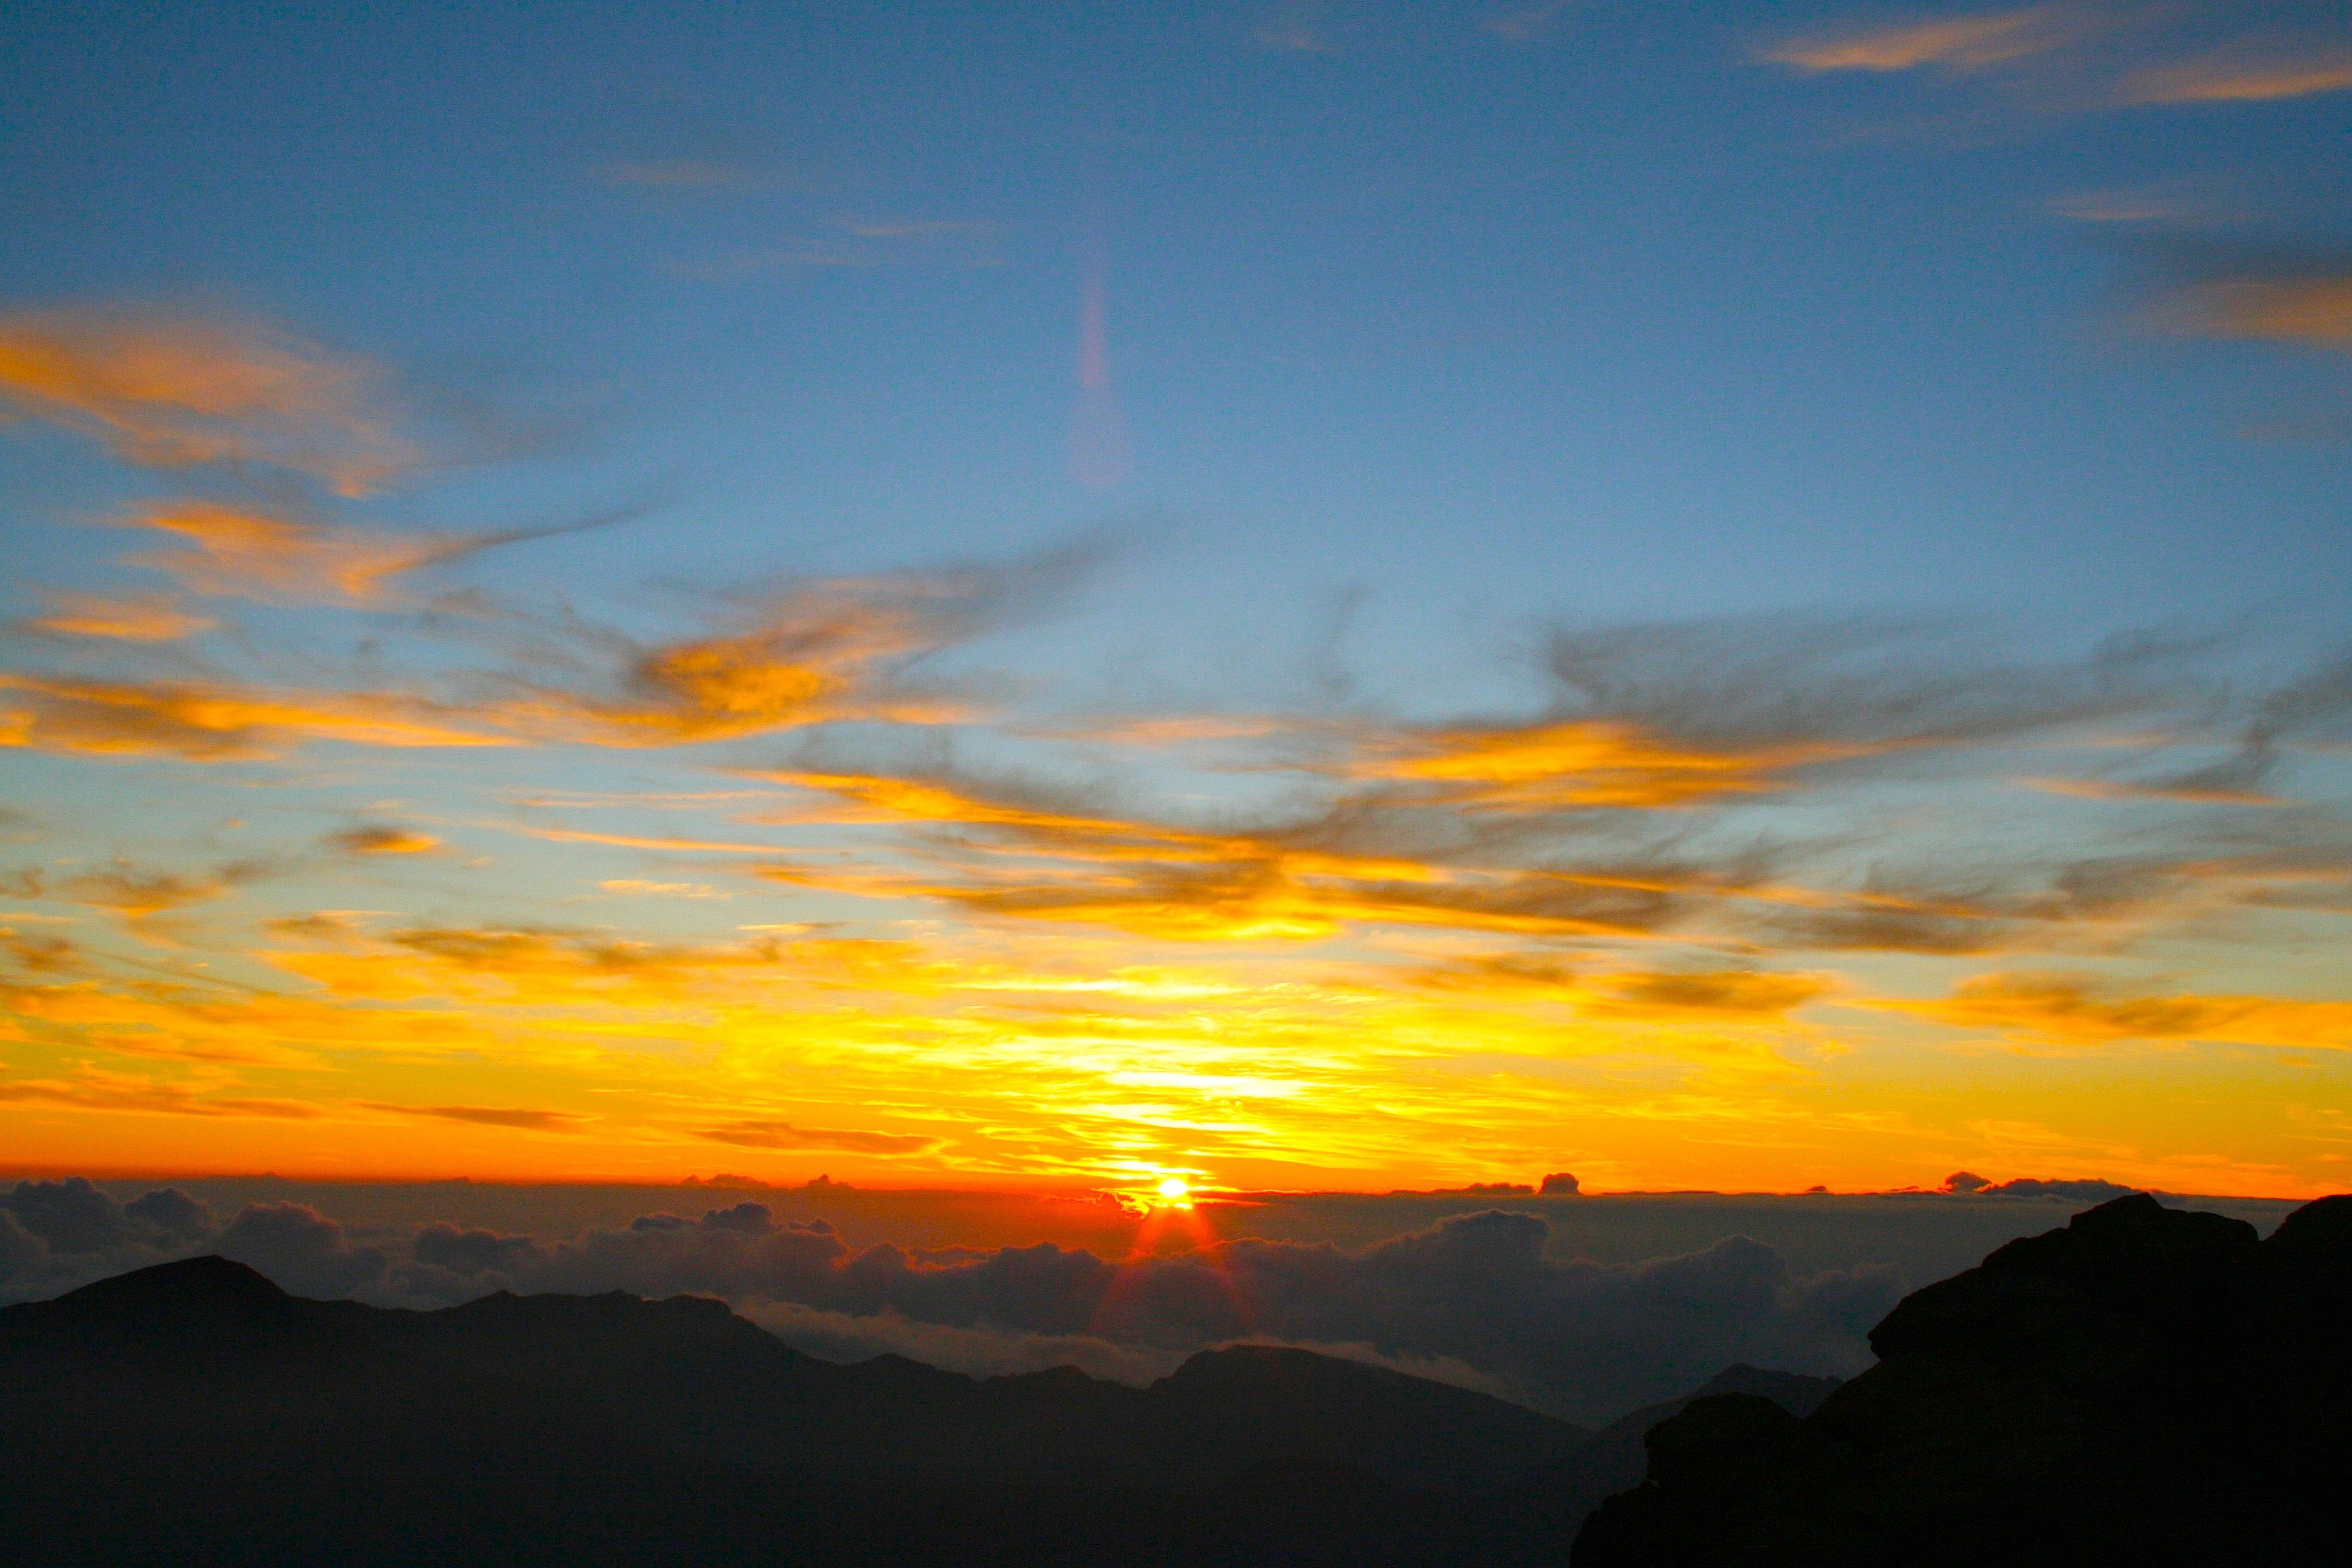 A view of the Hawaii sunrise from the peak of Haleakala. 